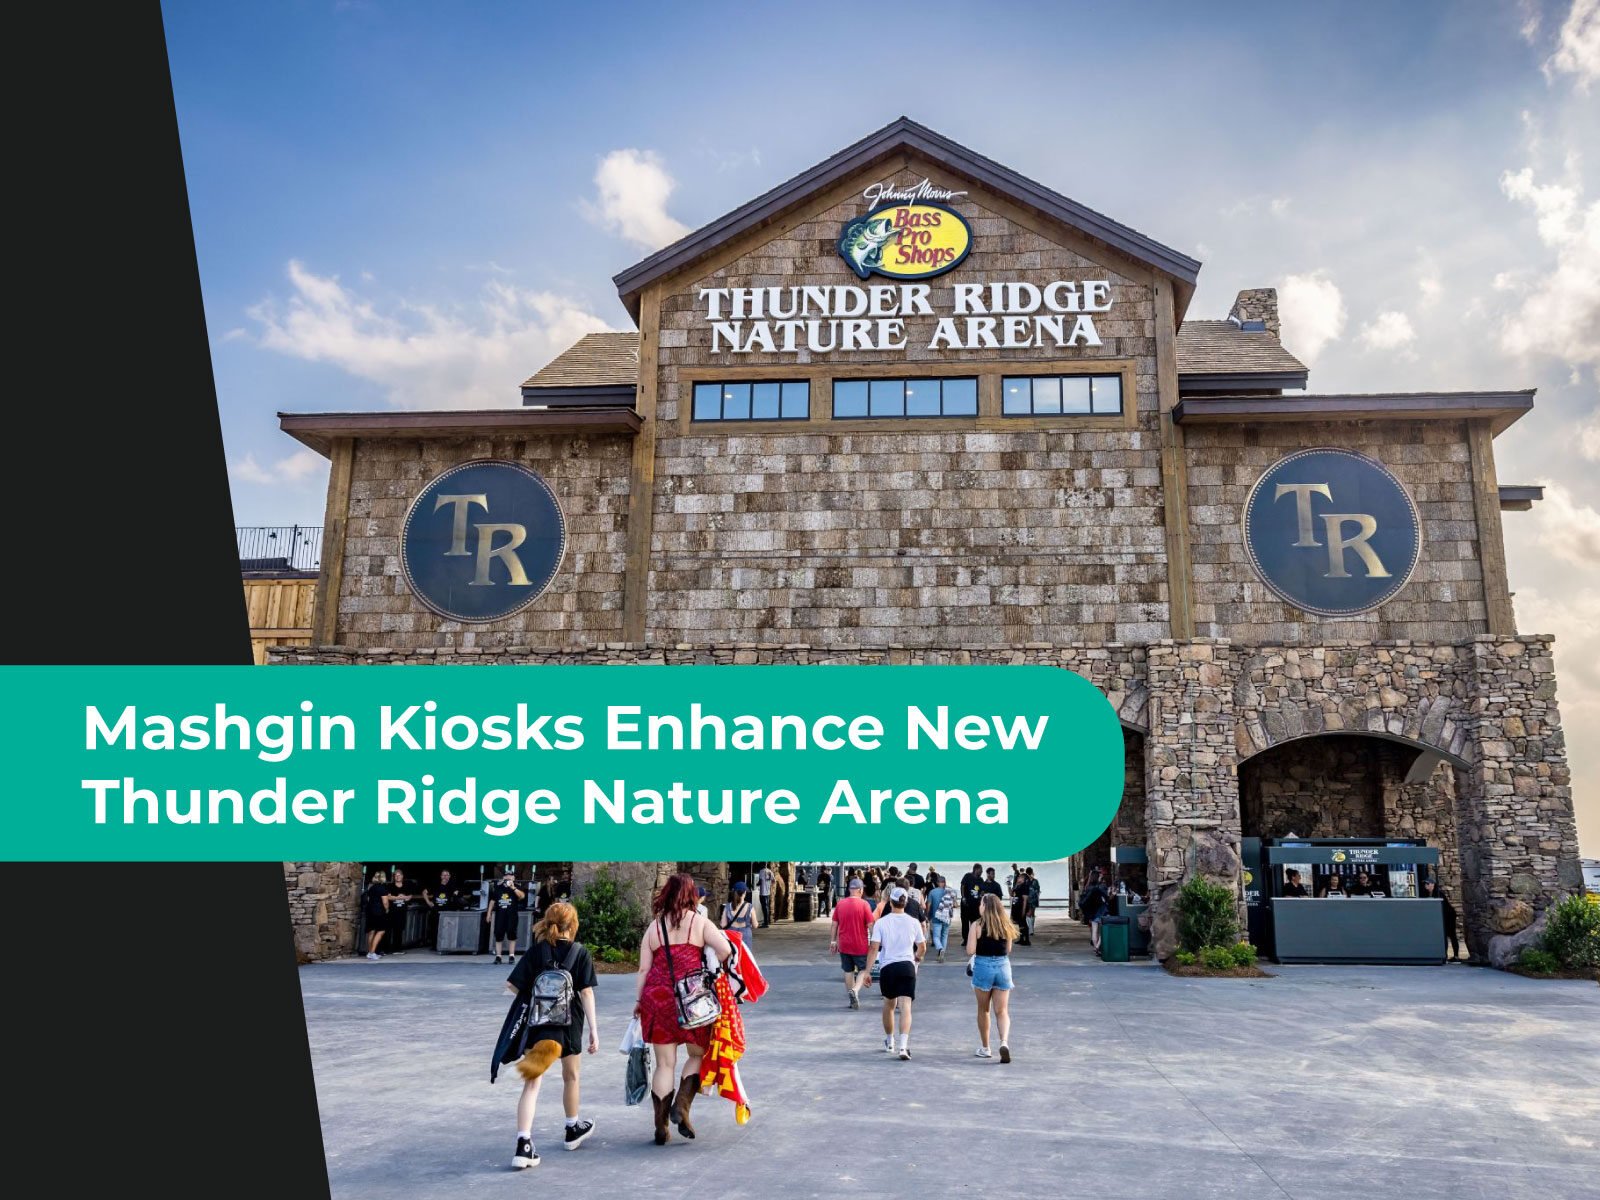 Mashgin kiosks enhance new Thunder Ridge Nature Arena